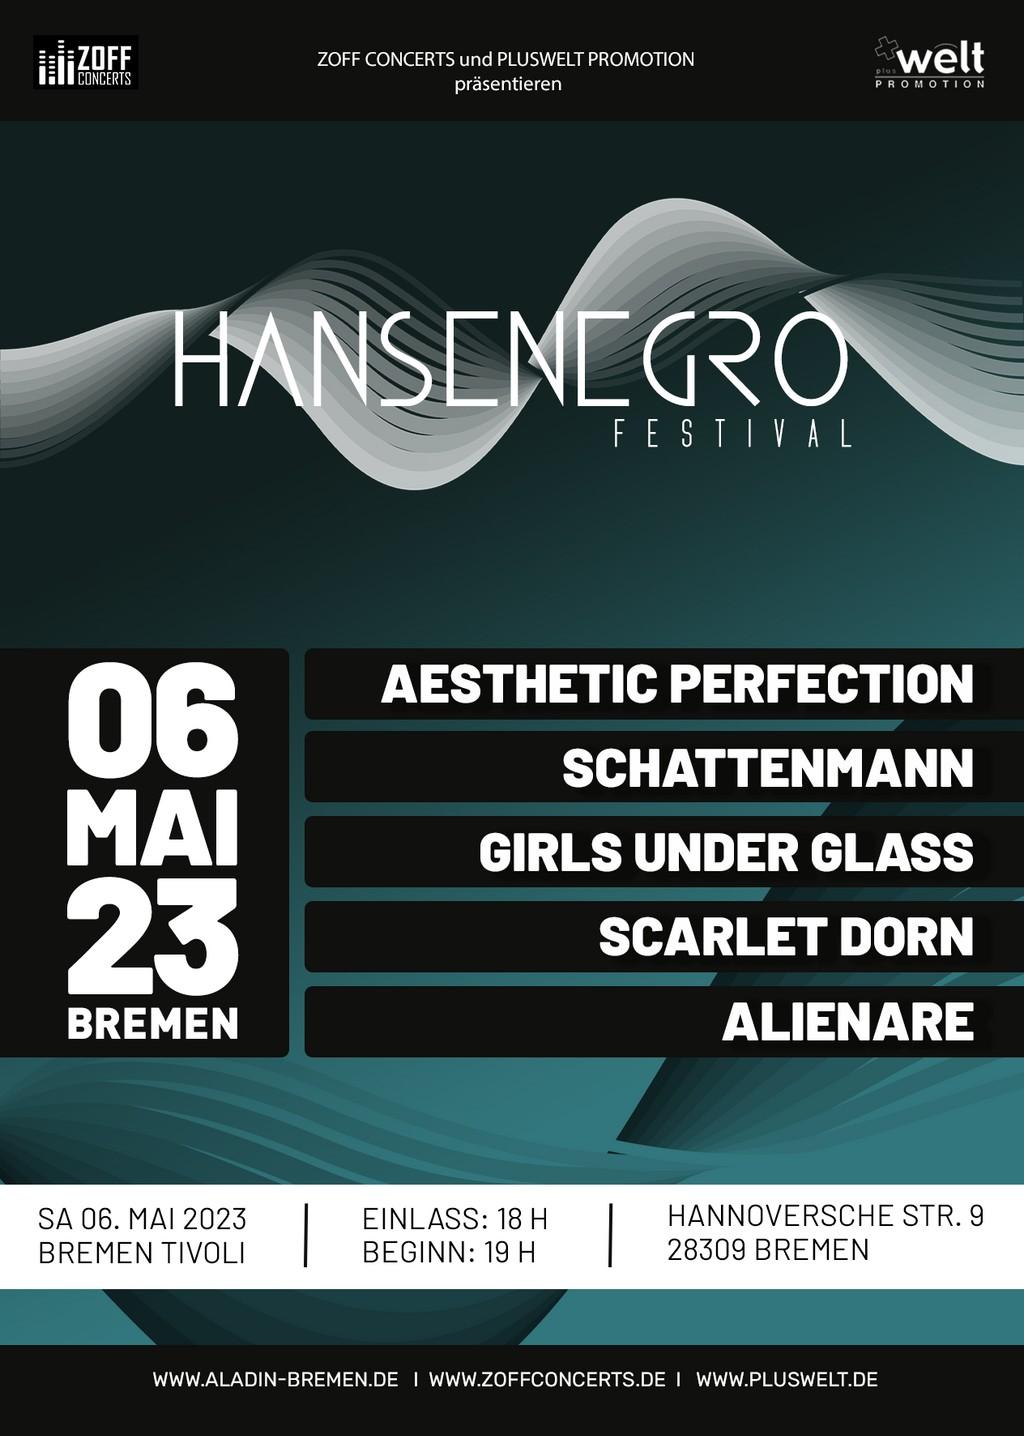 Lineup Poster HANSENEGRO Festival 2023